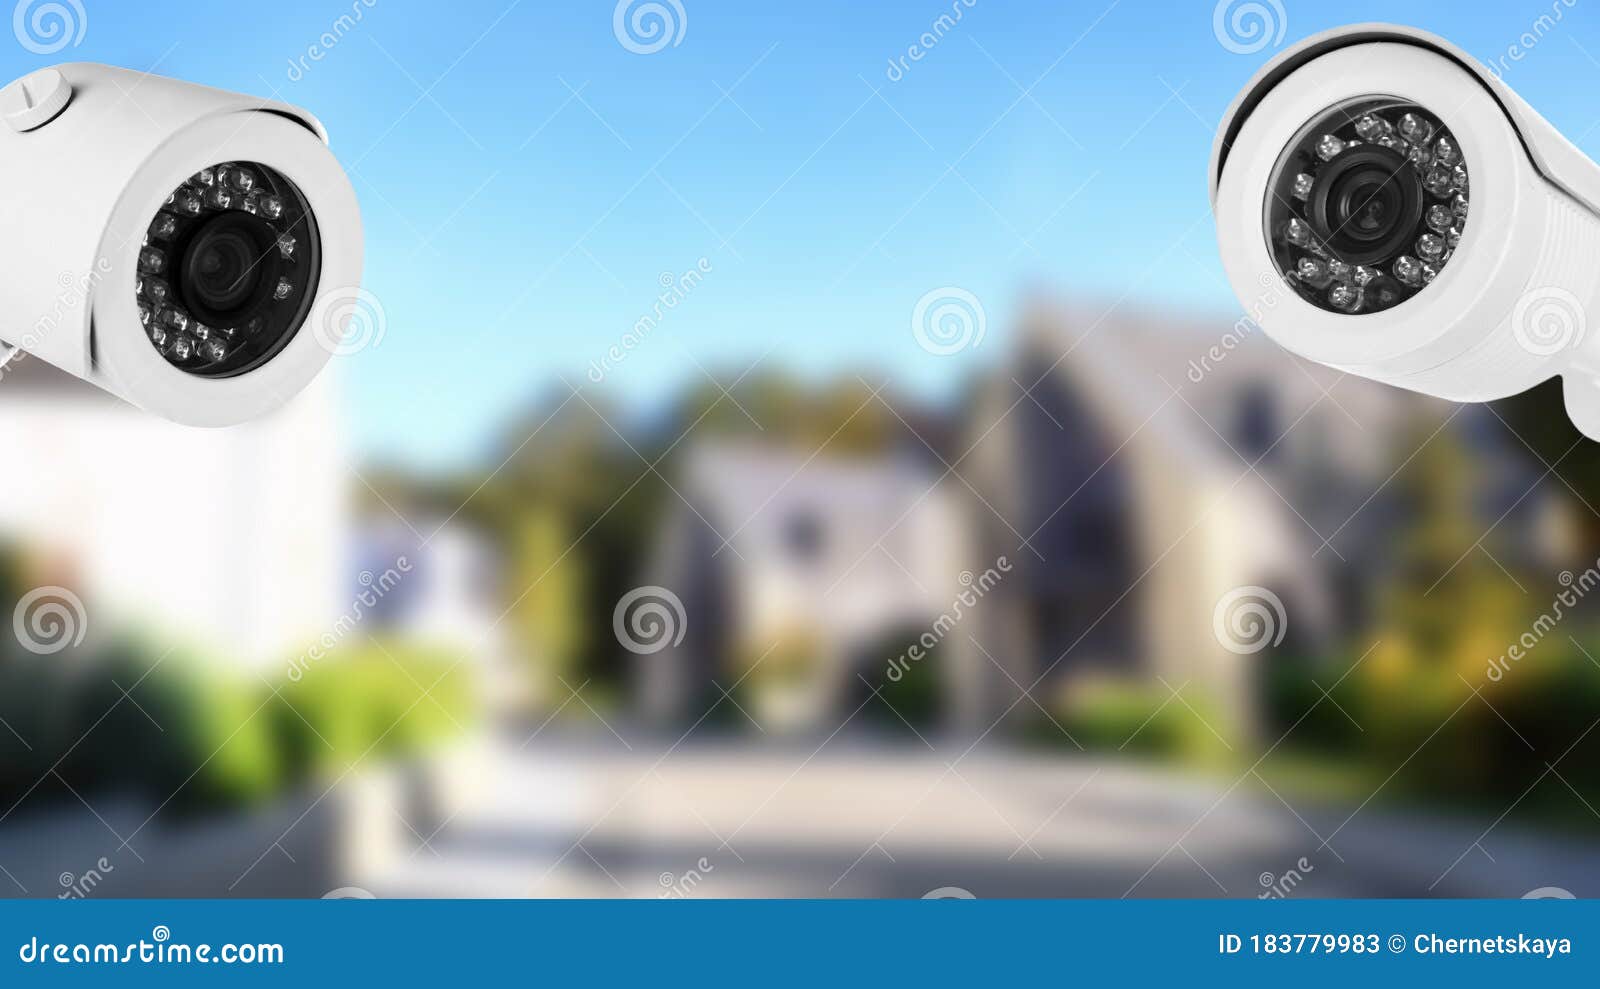 security system. house under cctv cameras surveillance